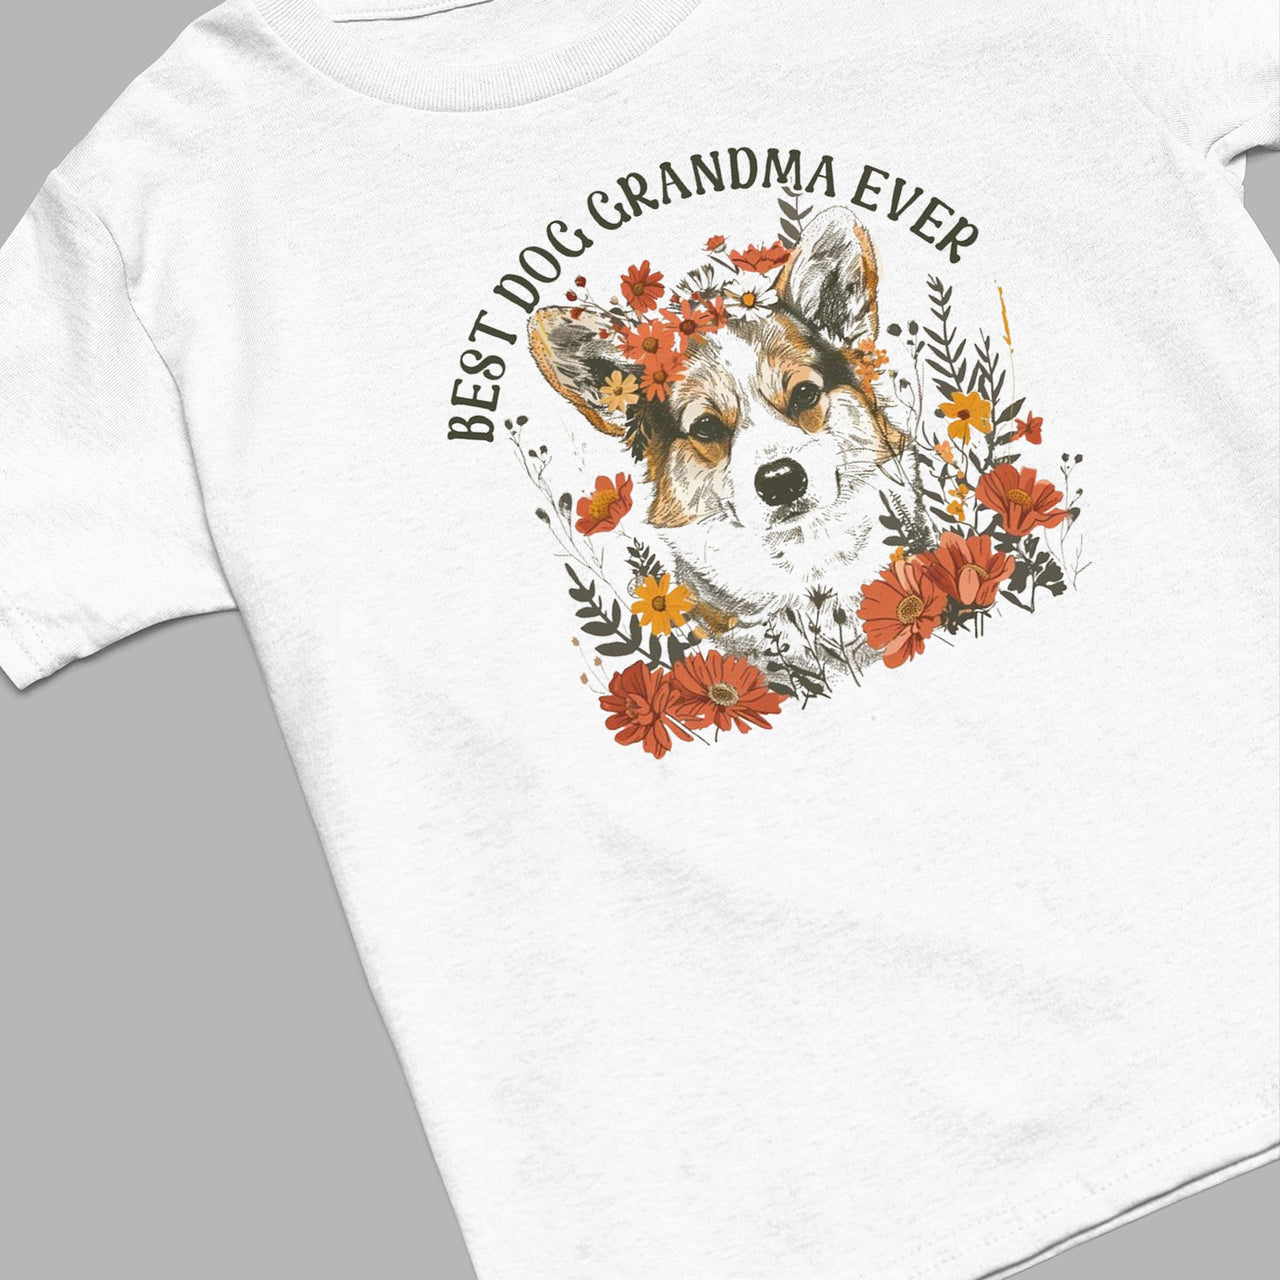 Corgi Dog T-shirt, Pet Lover Shirt, Dog Lover Shirt, Best Dog Grandma Ever T-Shirt, Dog Owner Shirt, Gift For Dog Grandma, Funny Dog Shirts, Women Dog T-Shirt, Mother's Day Gift, Dog Lover Wife Gifts, Dog Shirt